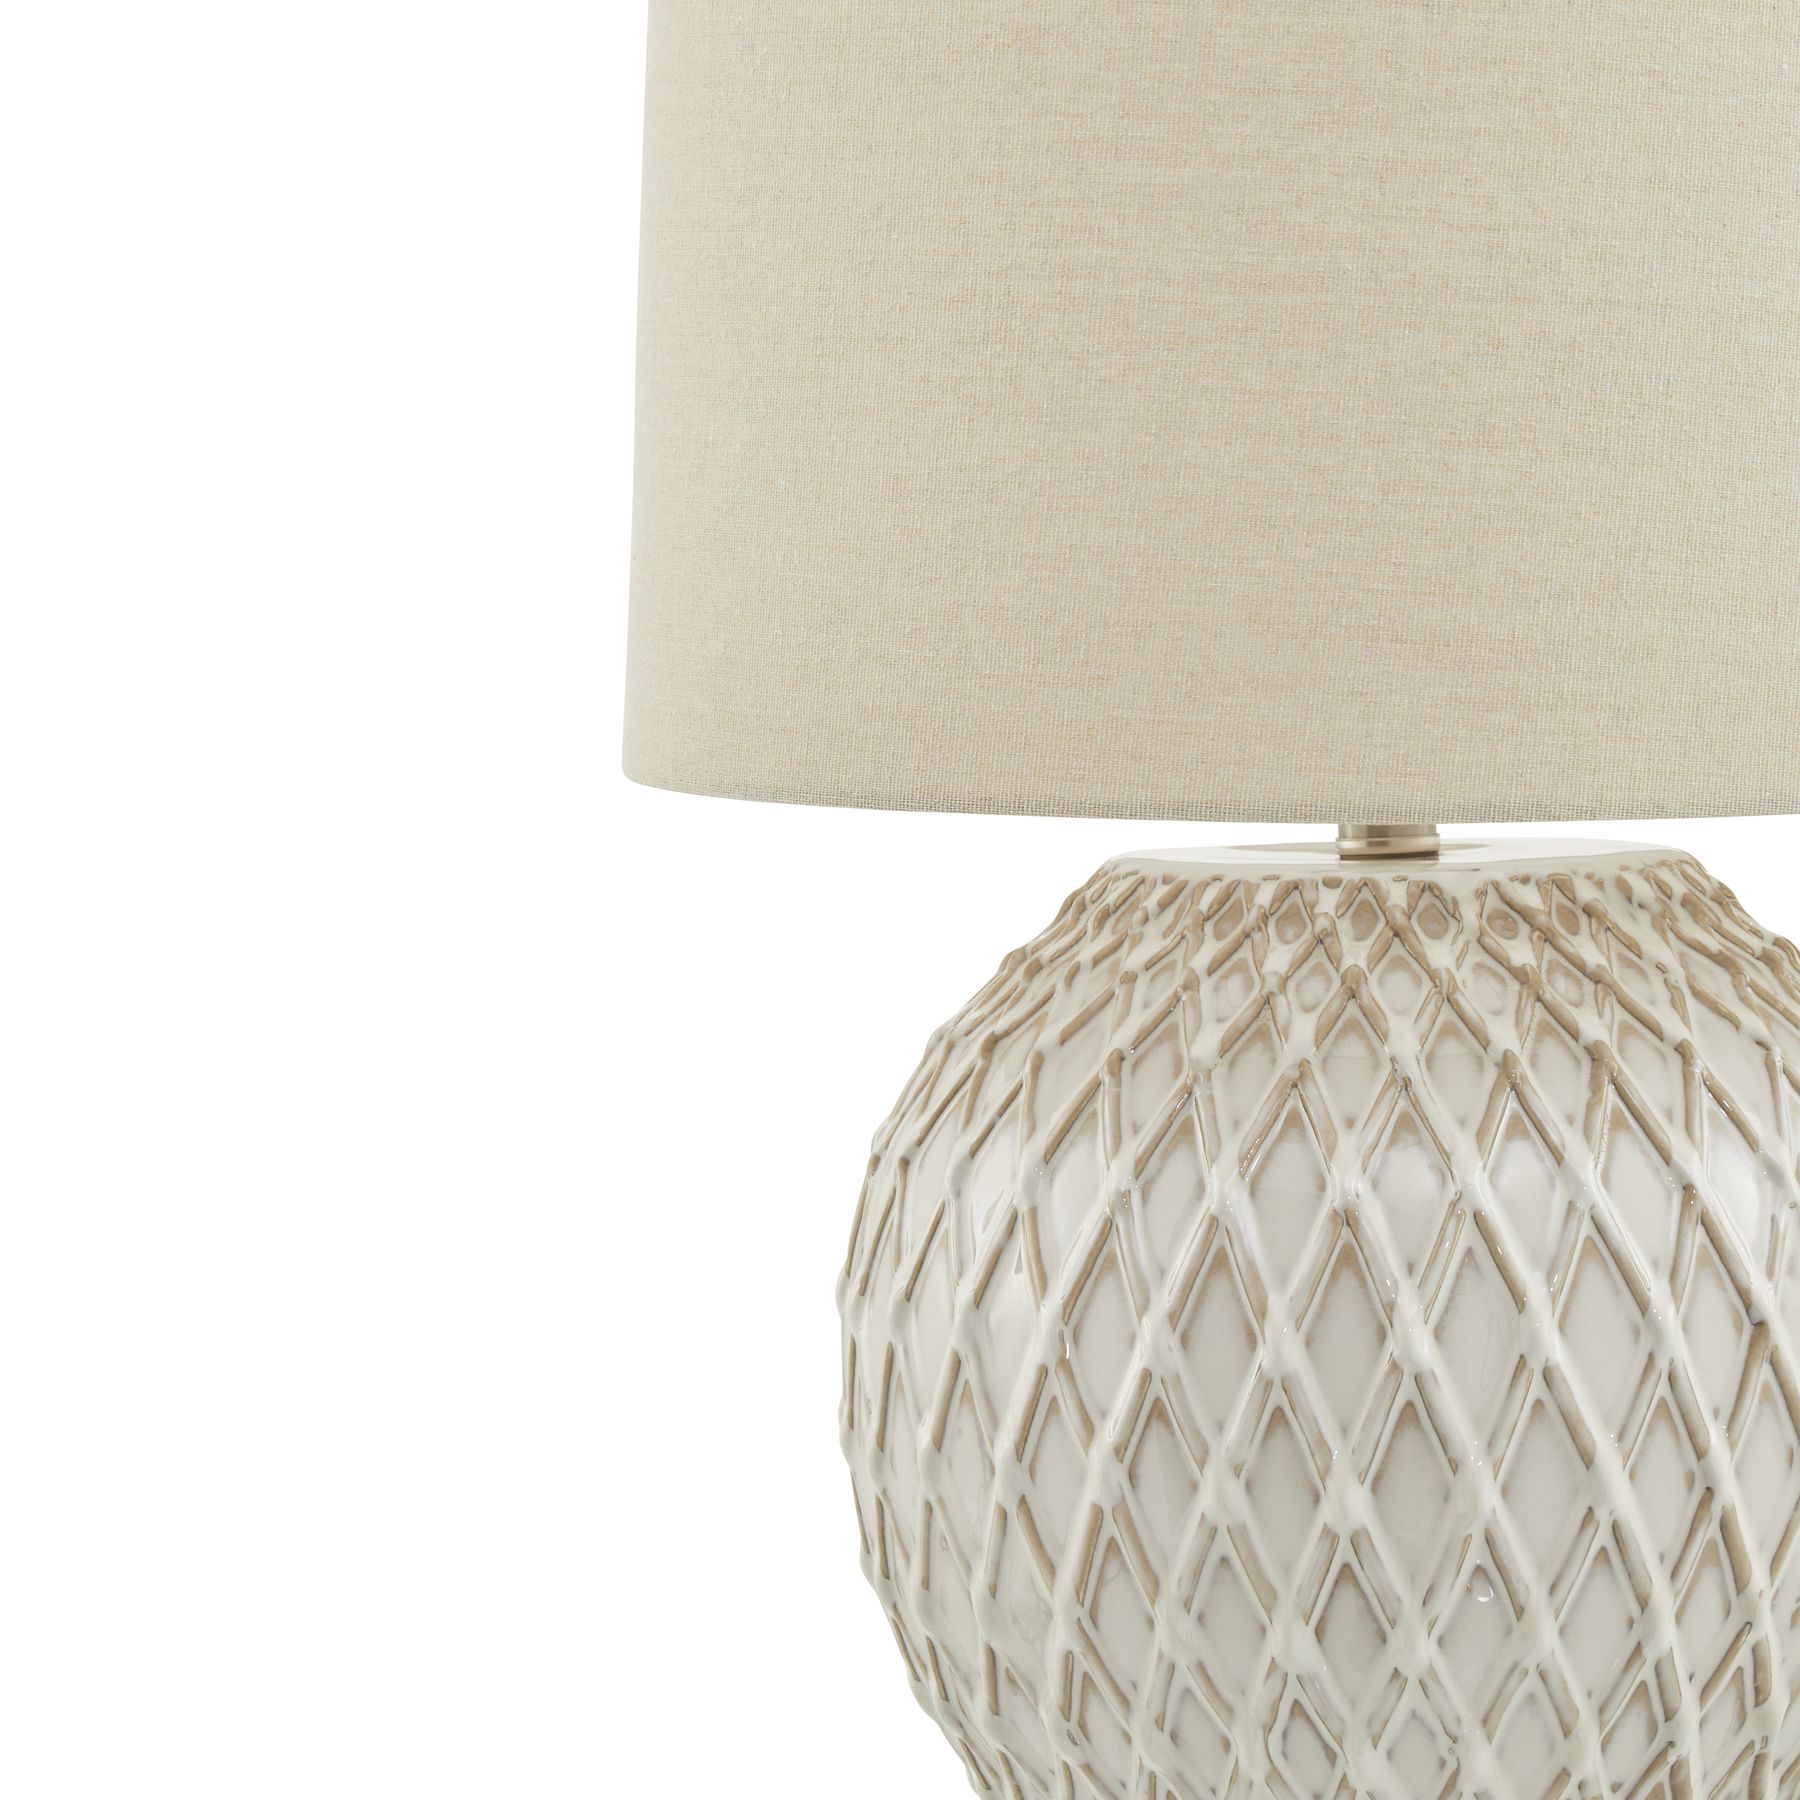 Lattice Ceramic Table Lamp With Linen Shade - Image 2